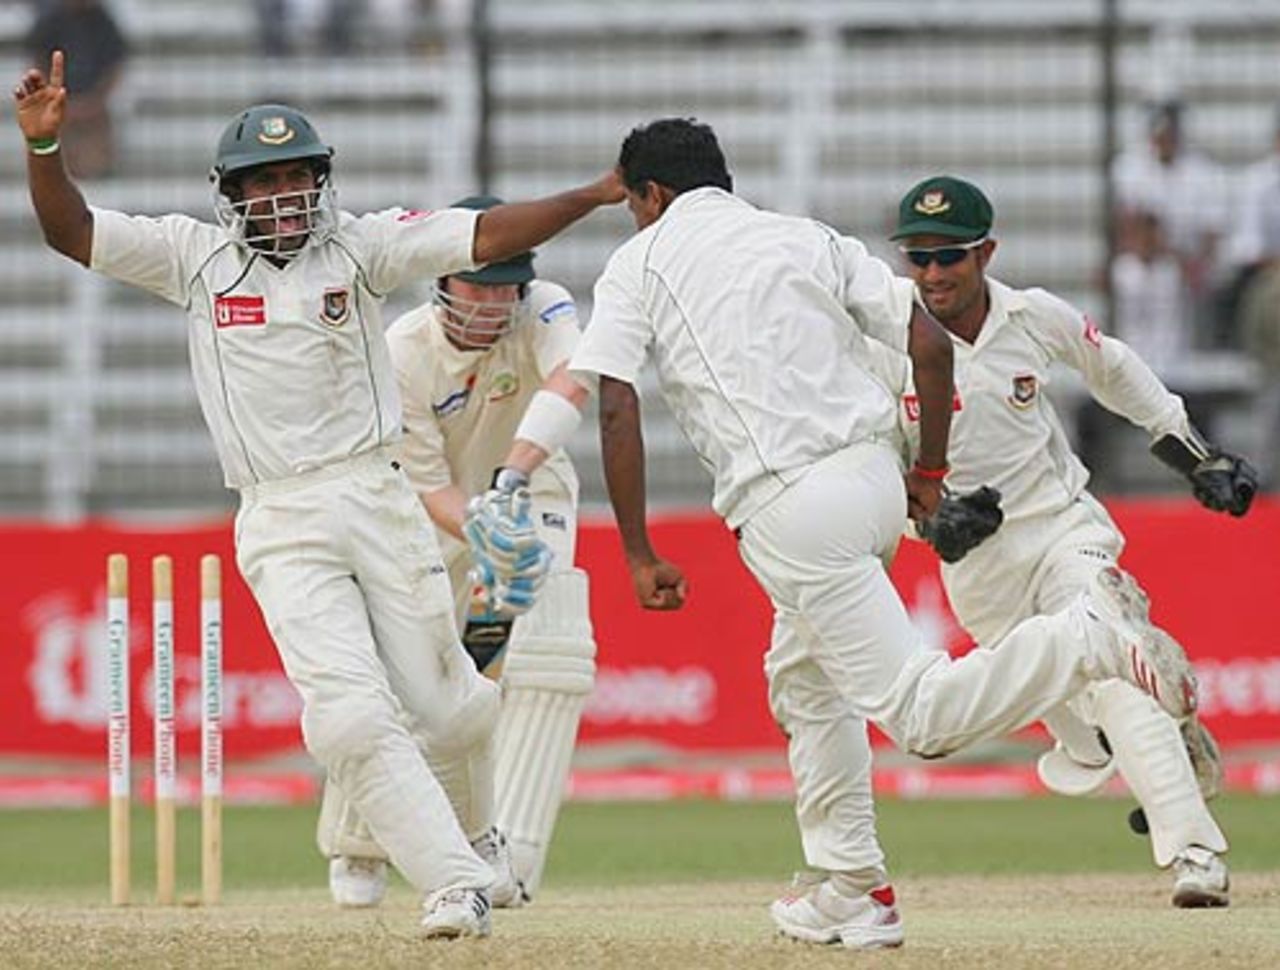 Enamul Haque takes off after bowling Michael Clarke, Bangladesh v Australia, 1st Test, Fatullah, 2nd day, April 10, 2006